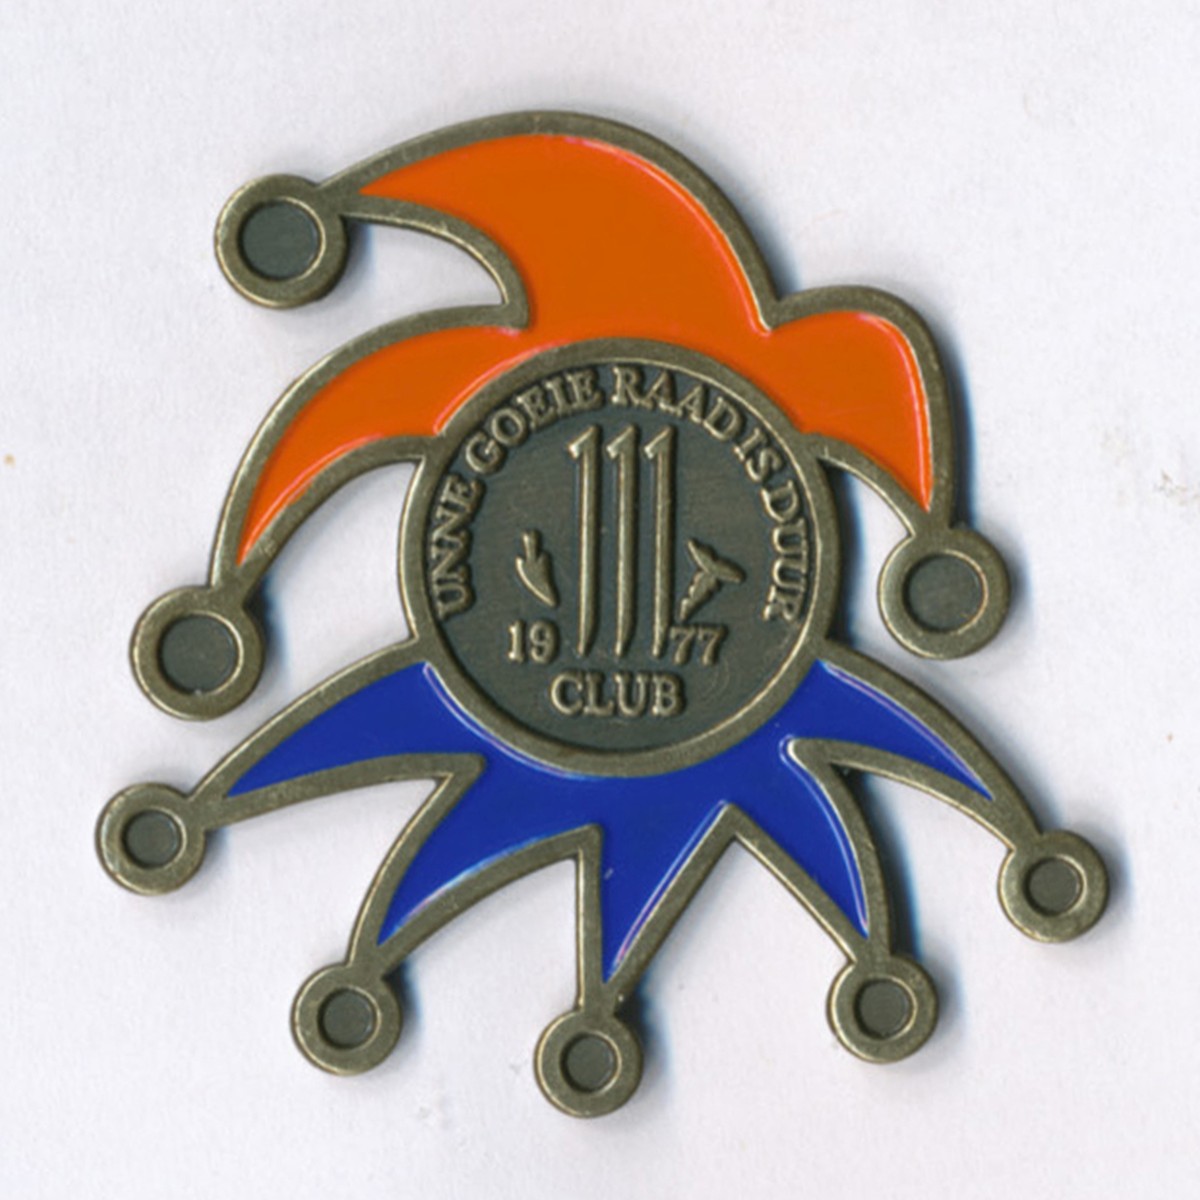 Club 111 pin